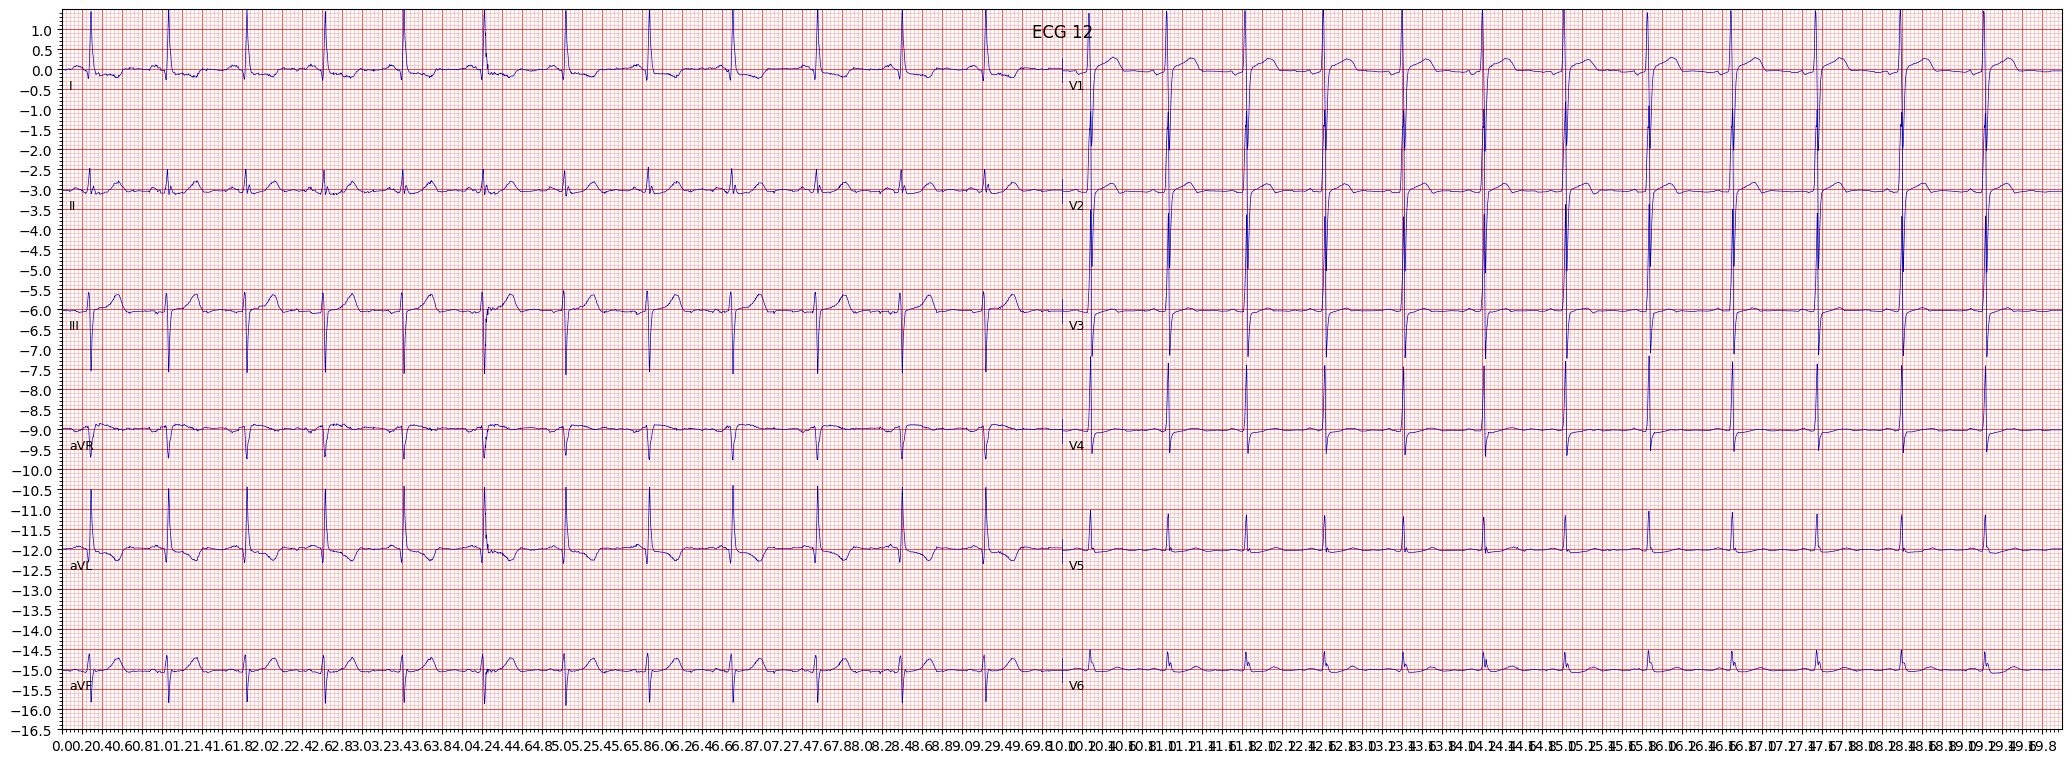 inferoposterolateral myocardial infarction (IPLMI) example 16521